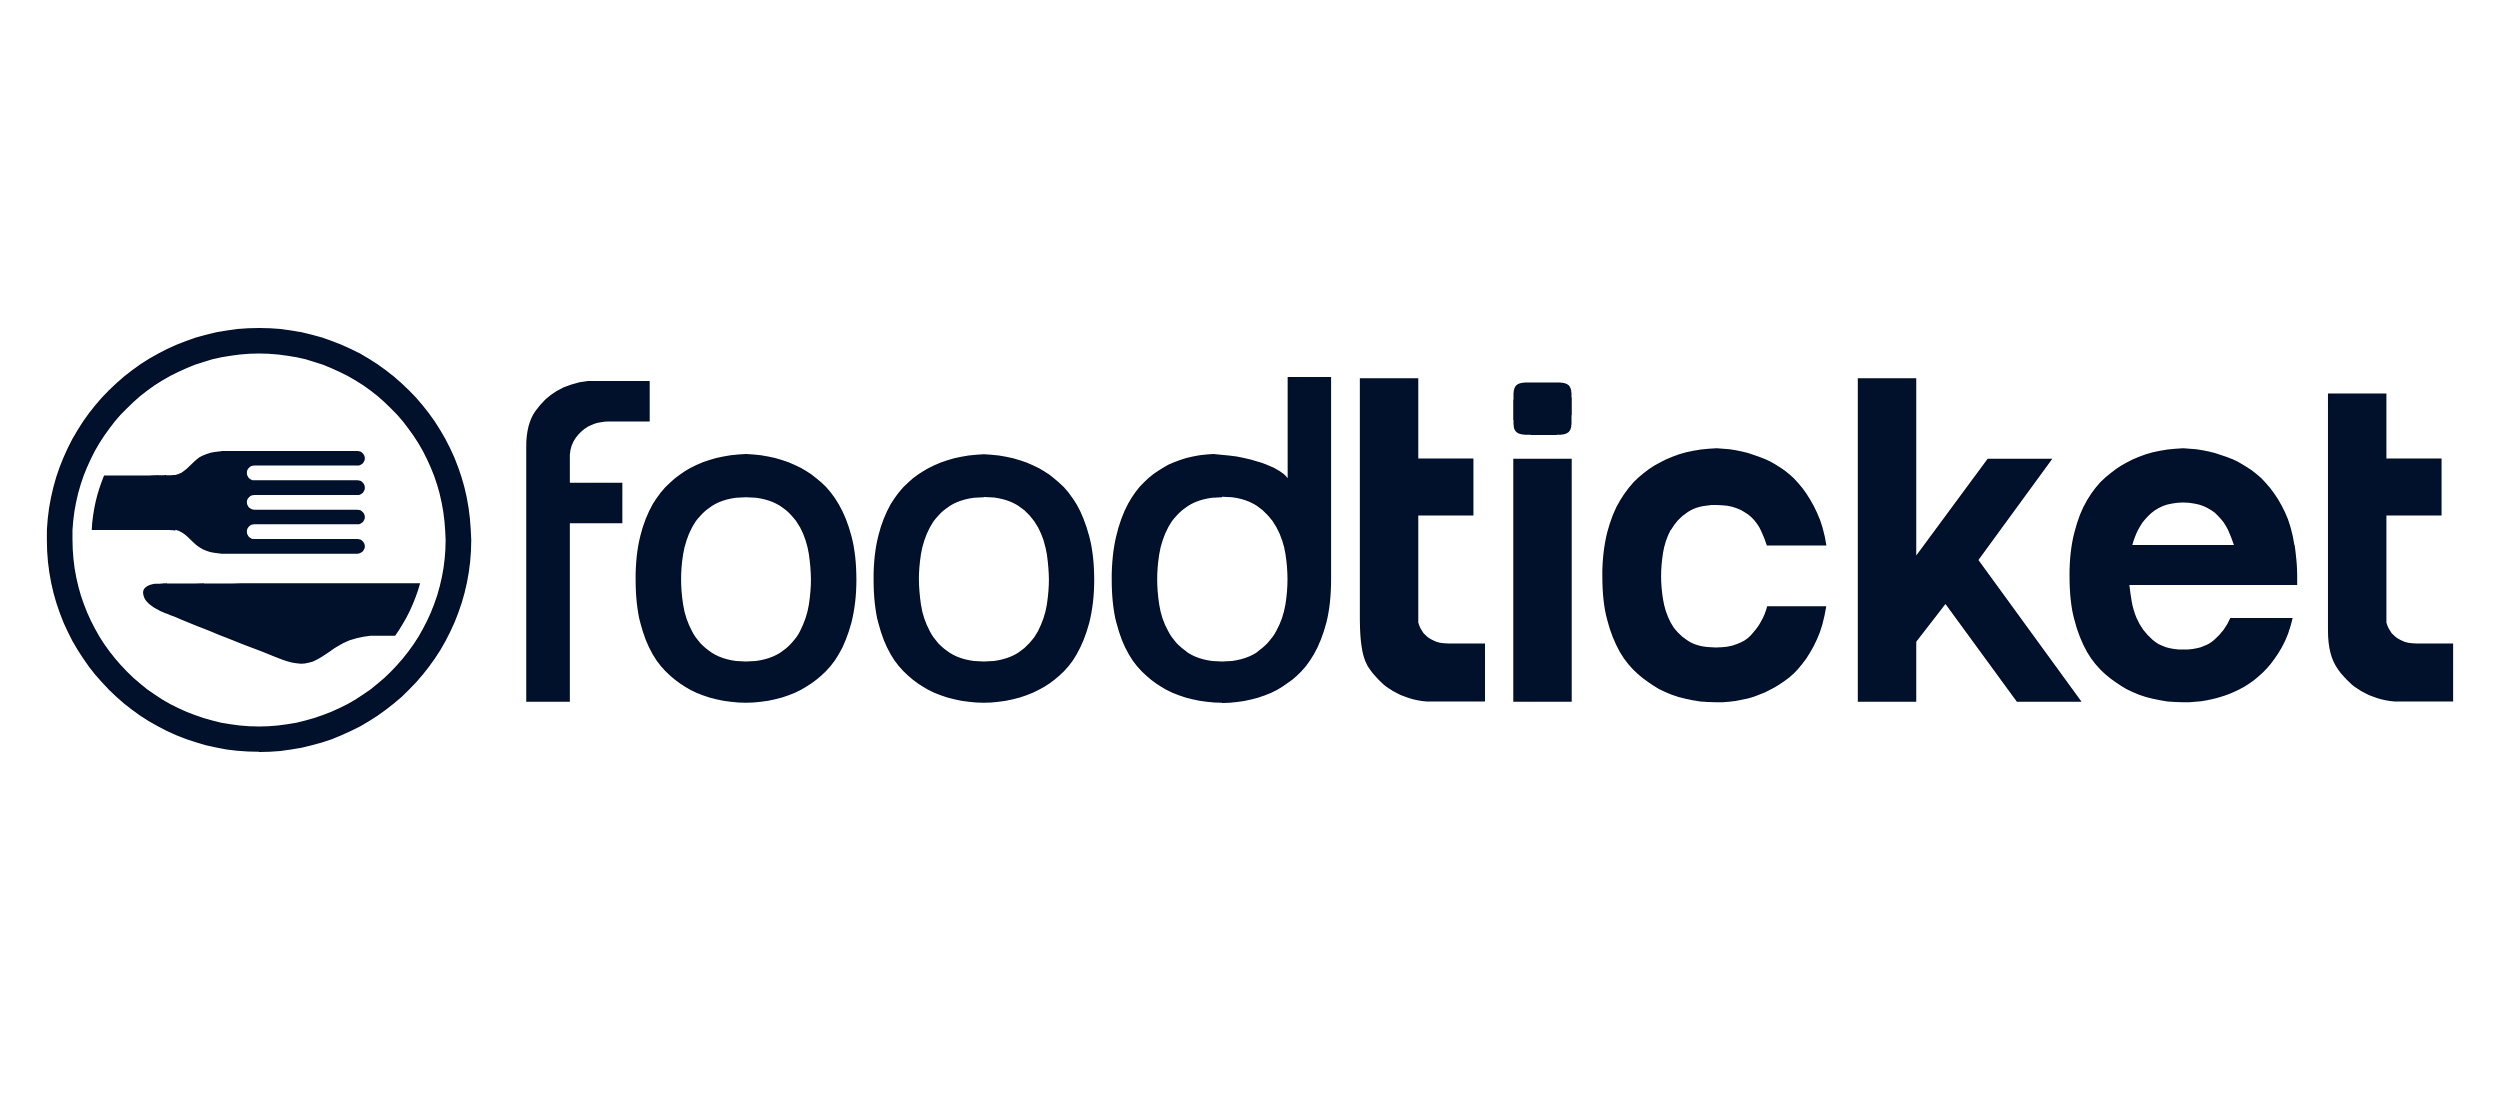 Foodticket logo